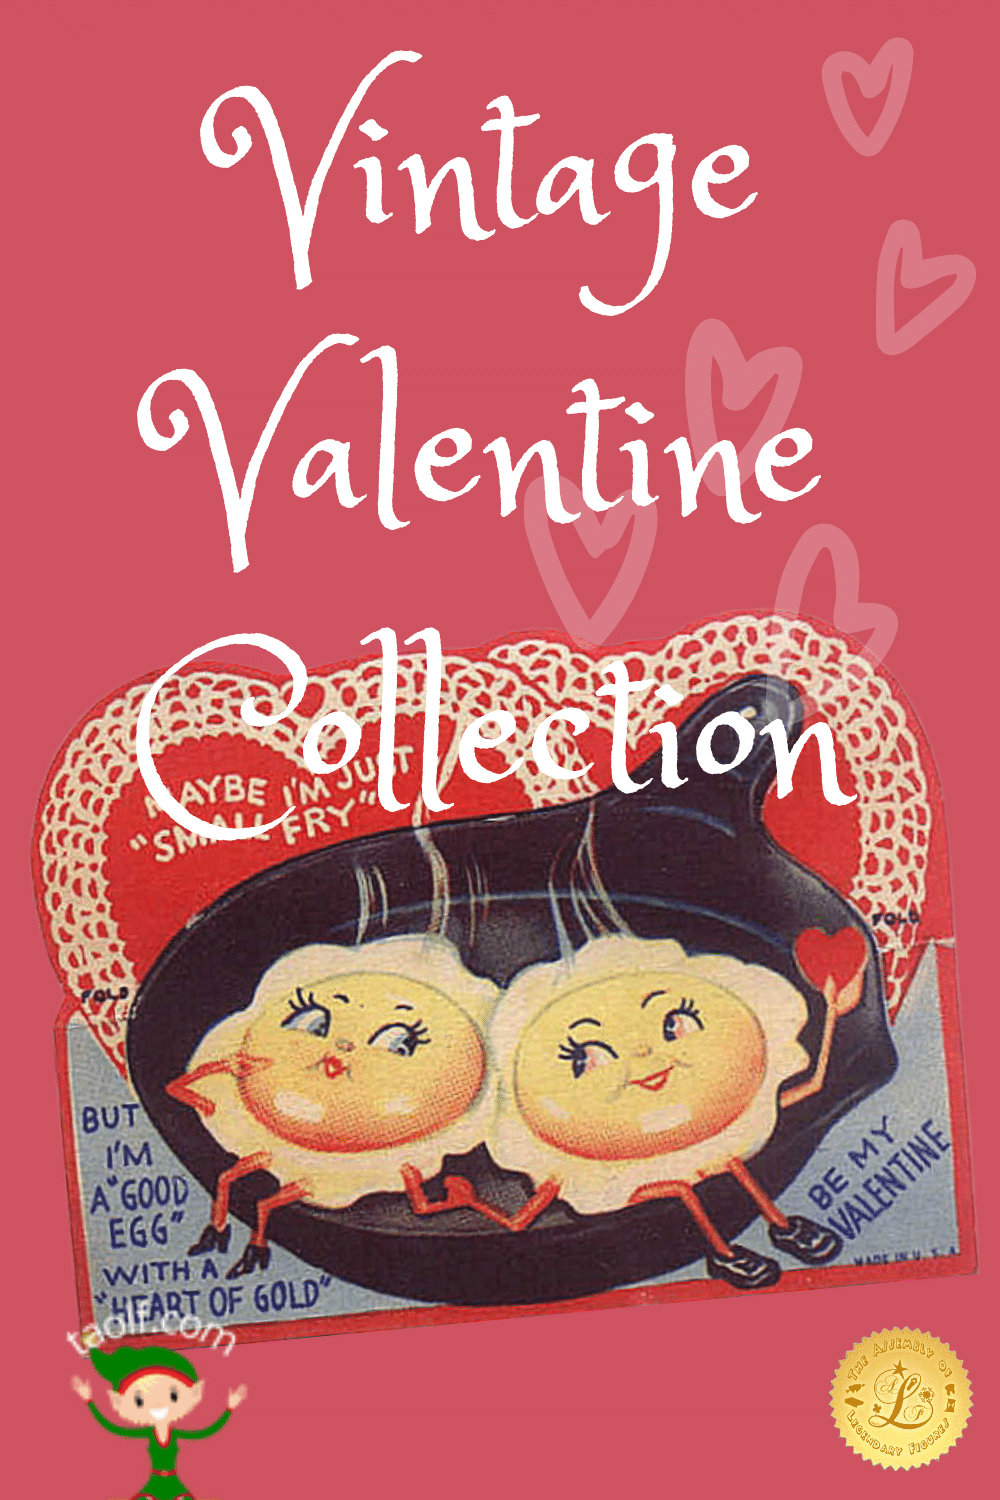 Cupid's Vintage Valentine Collection